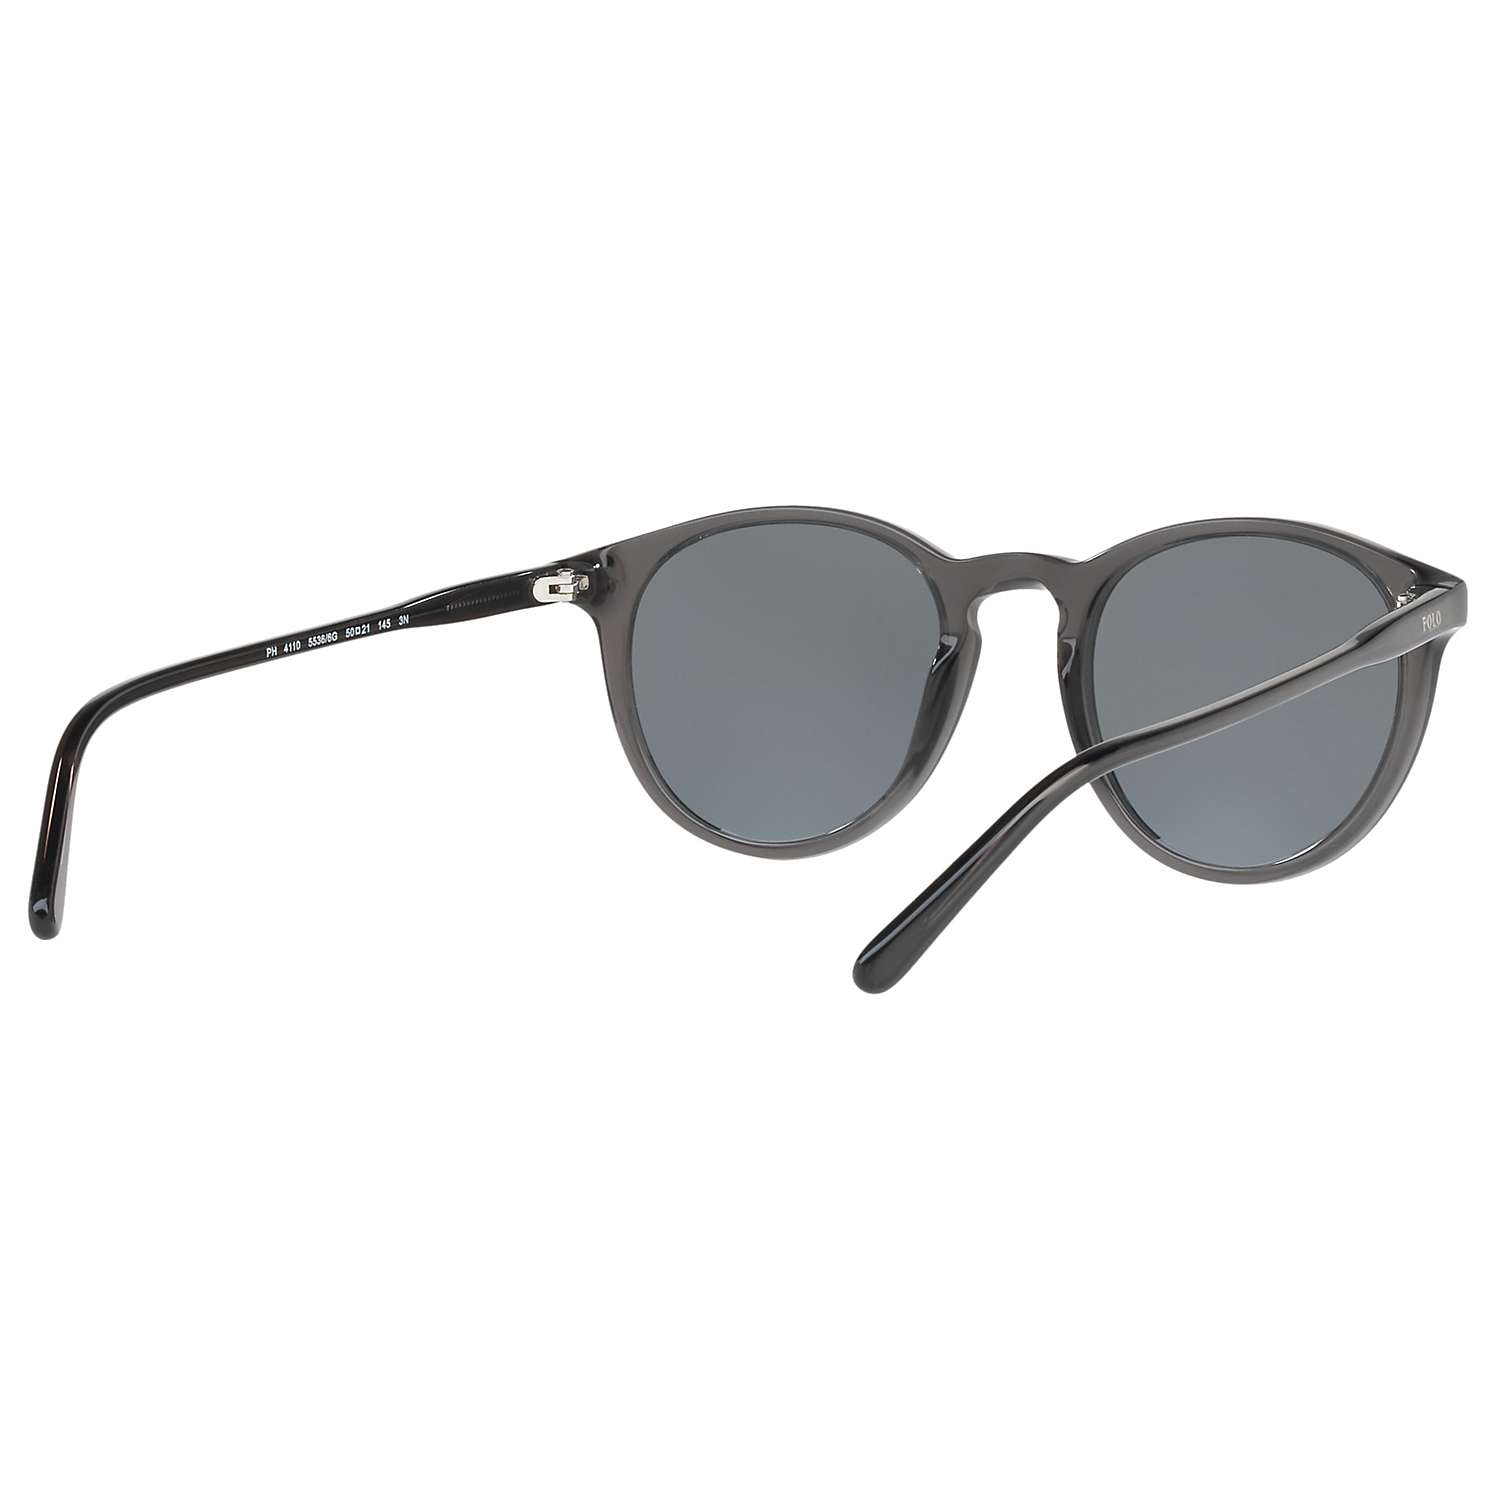 Buy Polo Ralph Lauren PH4110 Men's Oval Sunglasses Online at johnlewis.com